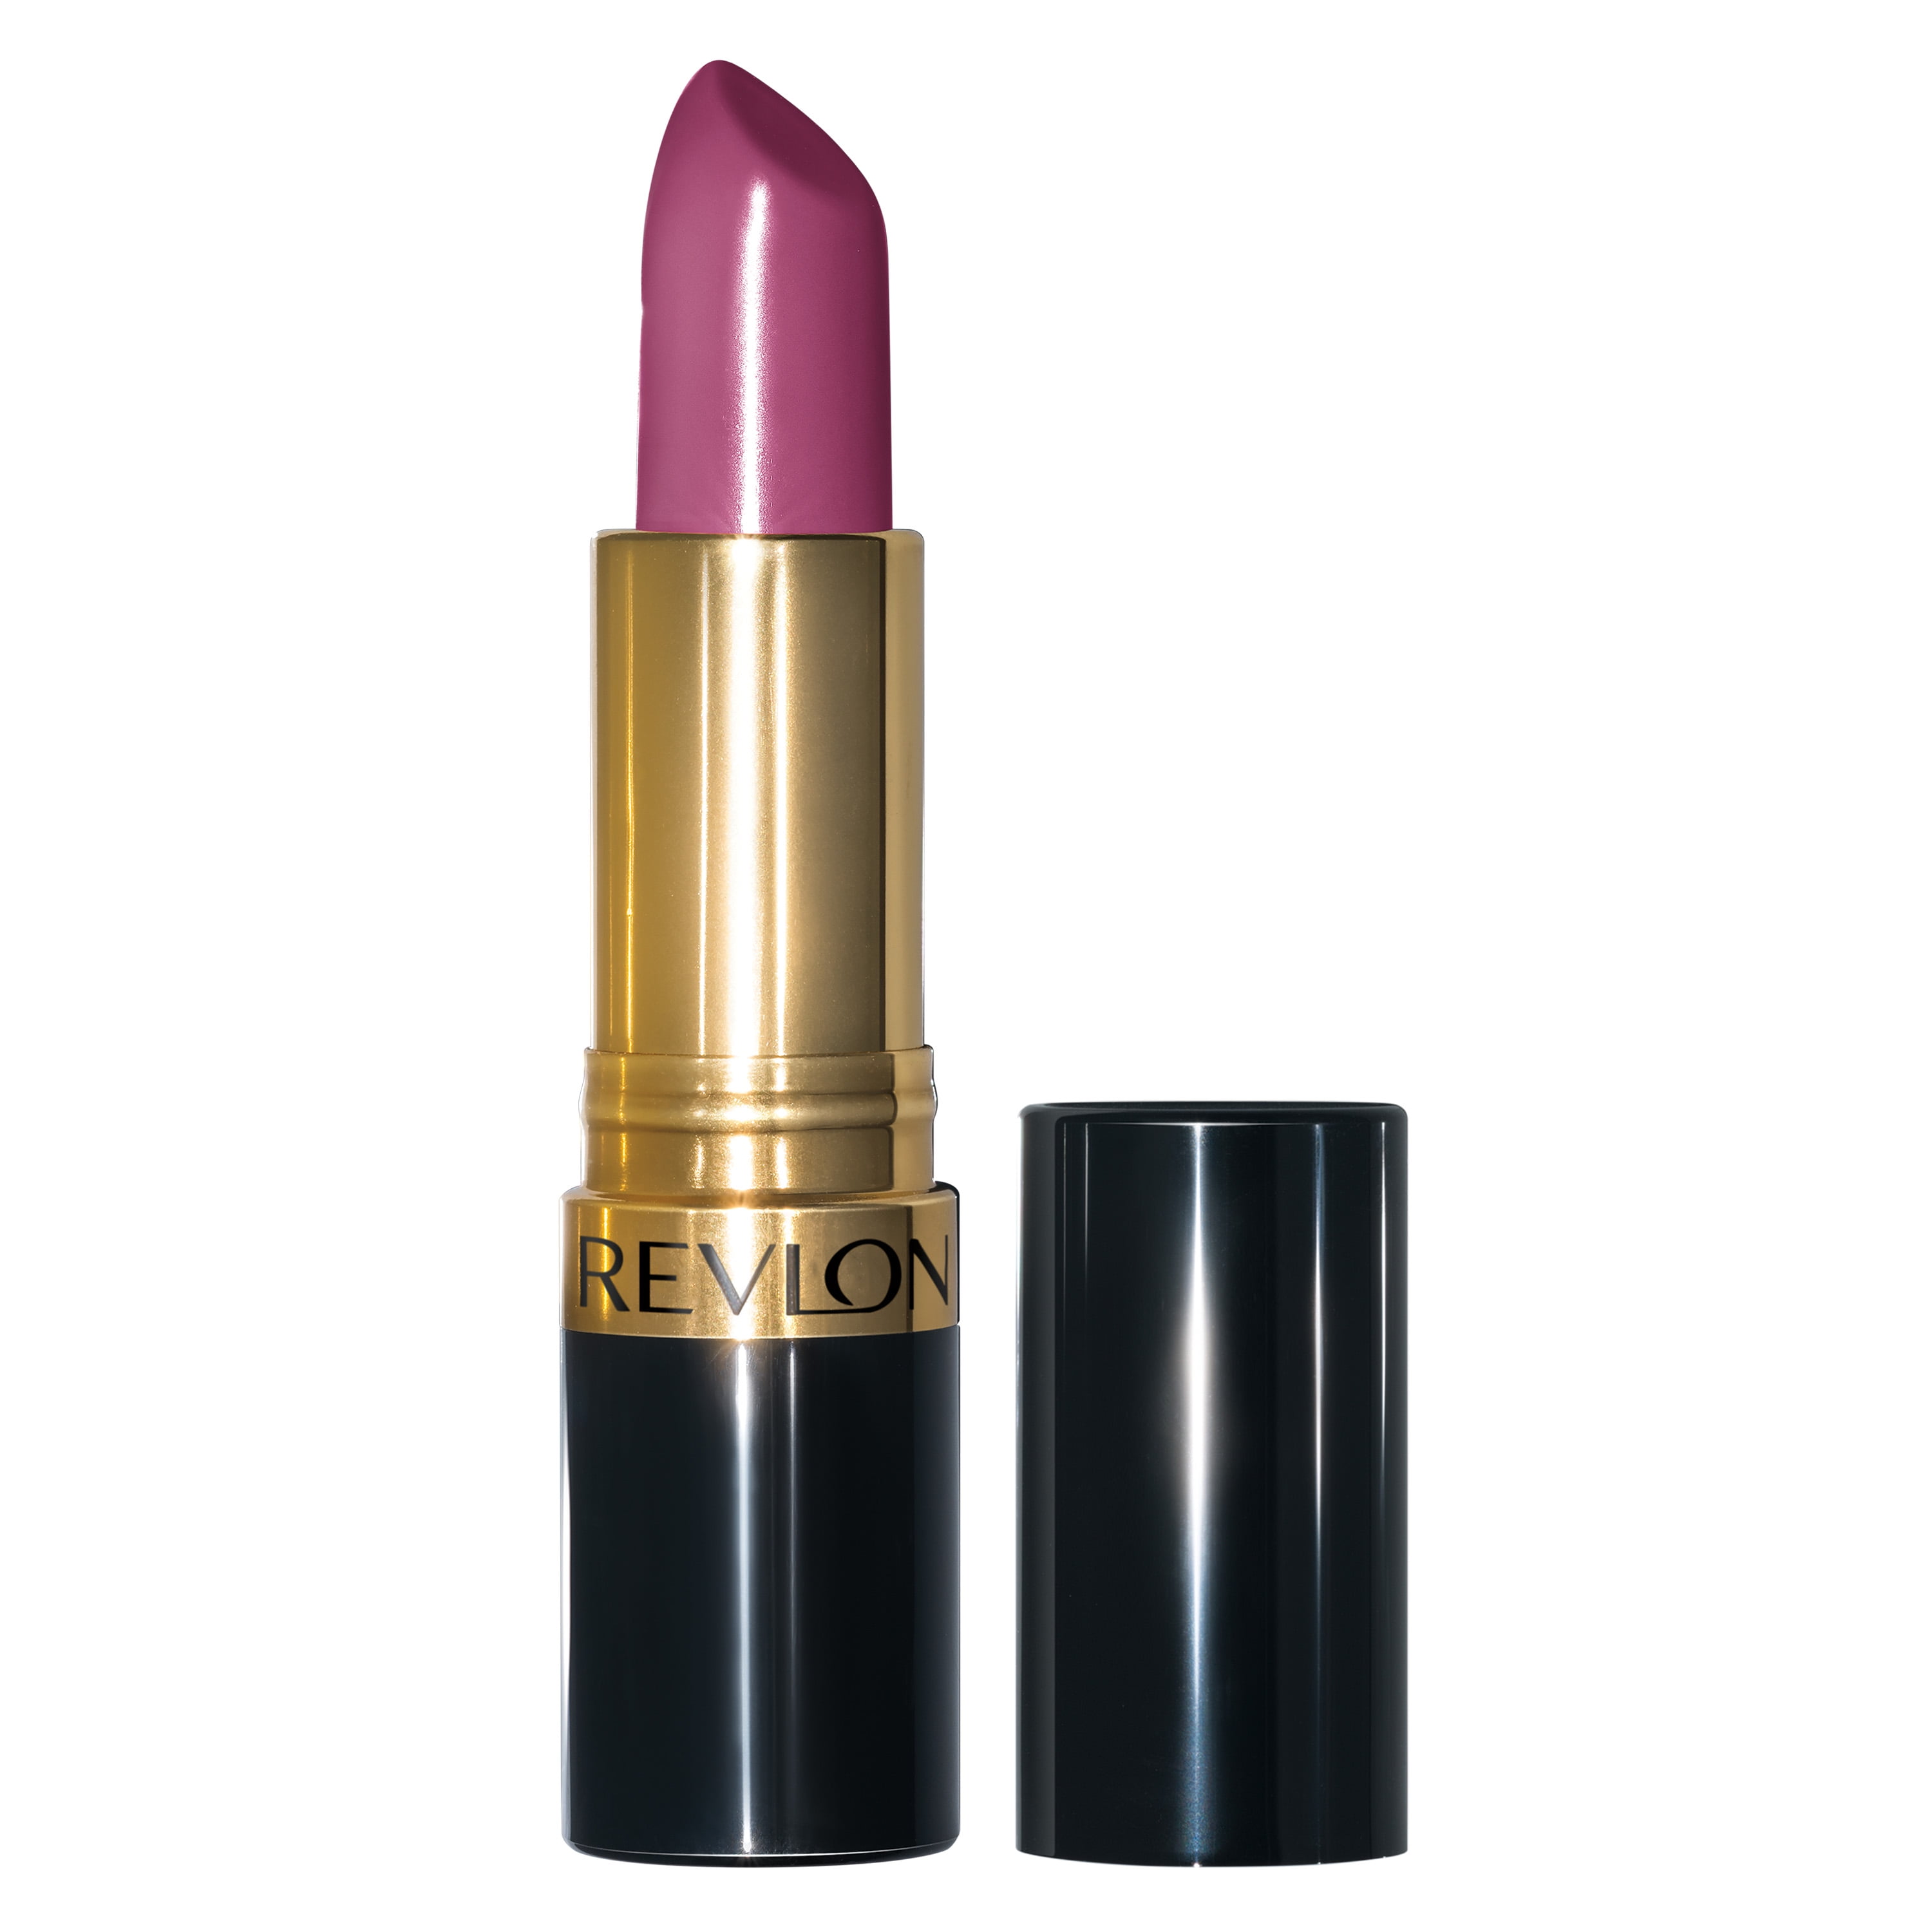 Revlon Super Lustrous Lipstick, Cream Finish, High Impact Lipcolor with Moisturizing Creamy Formula, Infused with Vitamin E and Avocado Oil, 660 Berry Haute, 0.15 oz